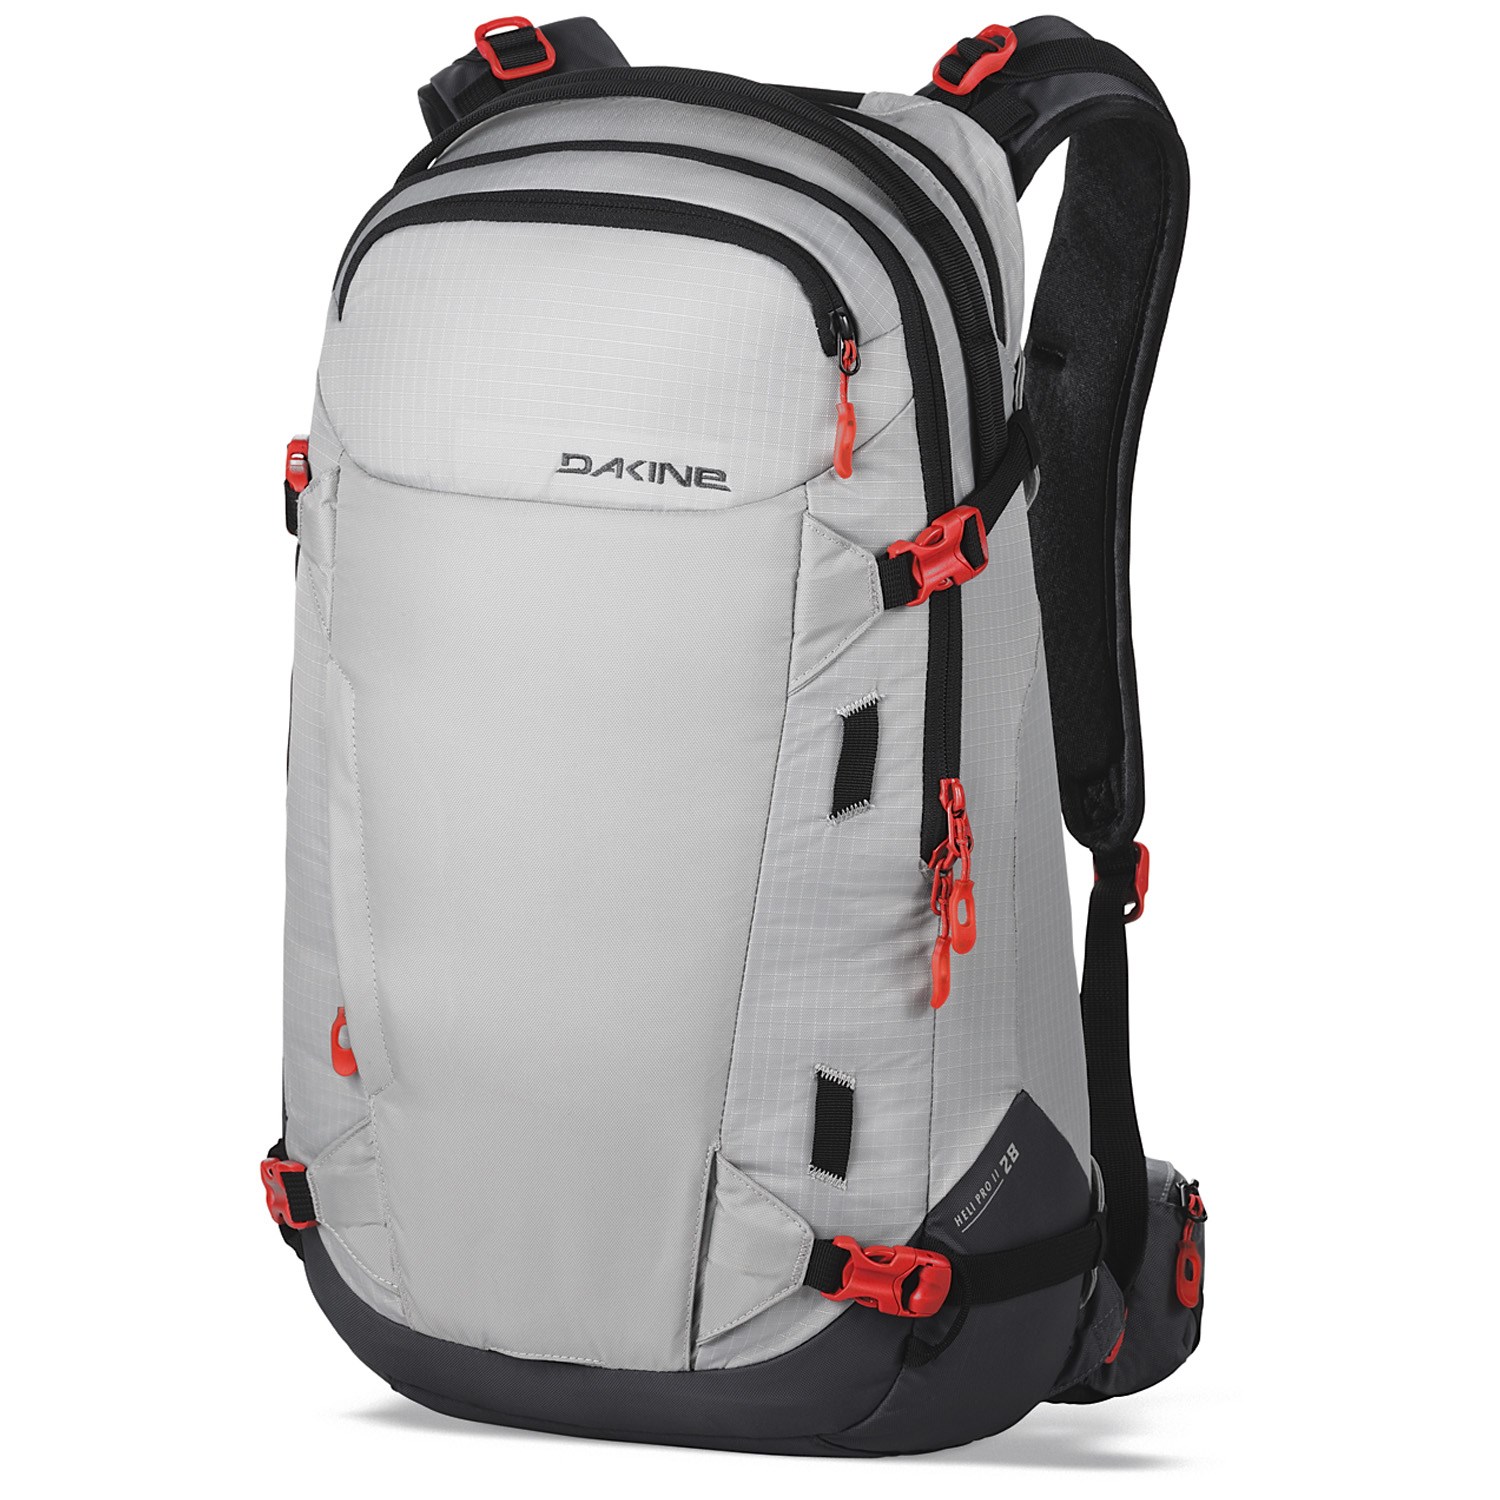 Thuisland graan Robijn Dakine Heli Pro II 28L Backpack | evo